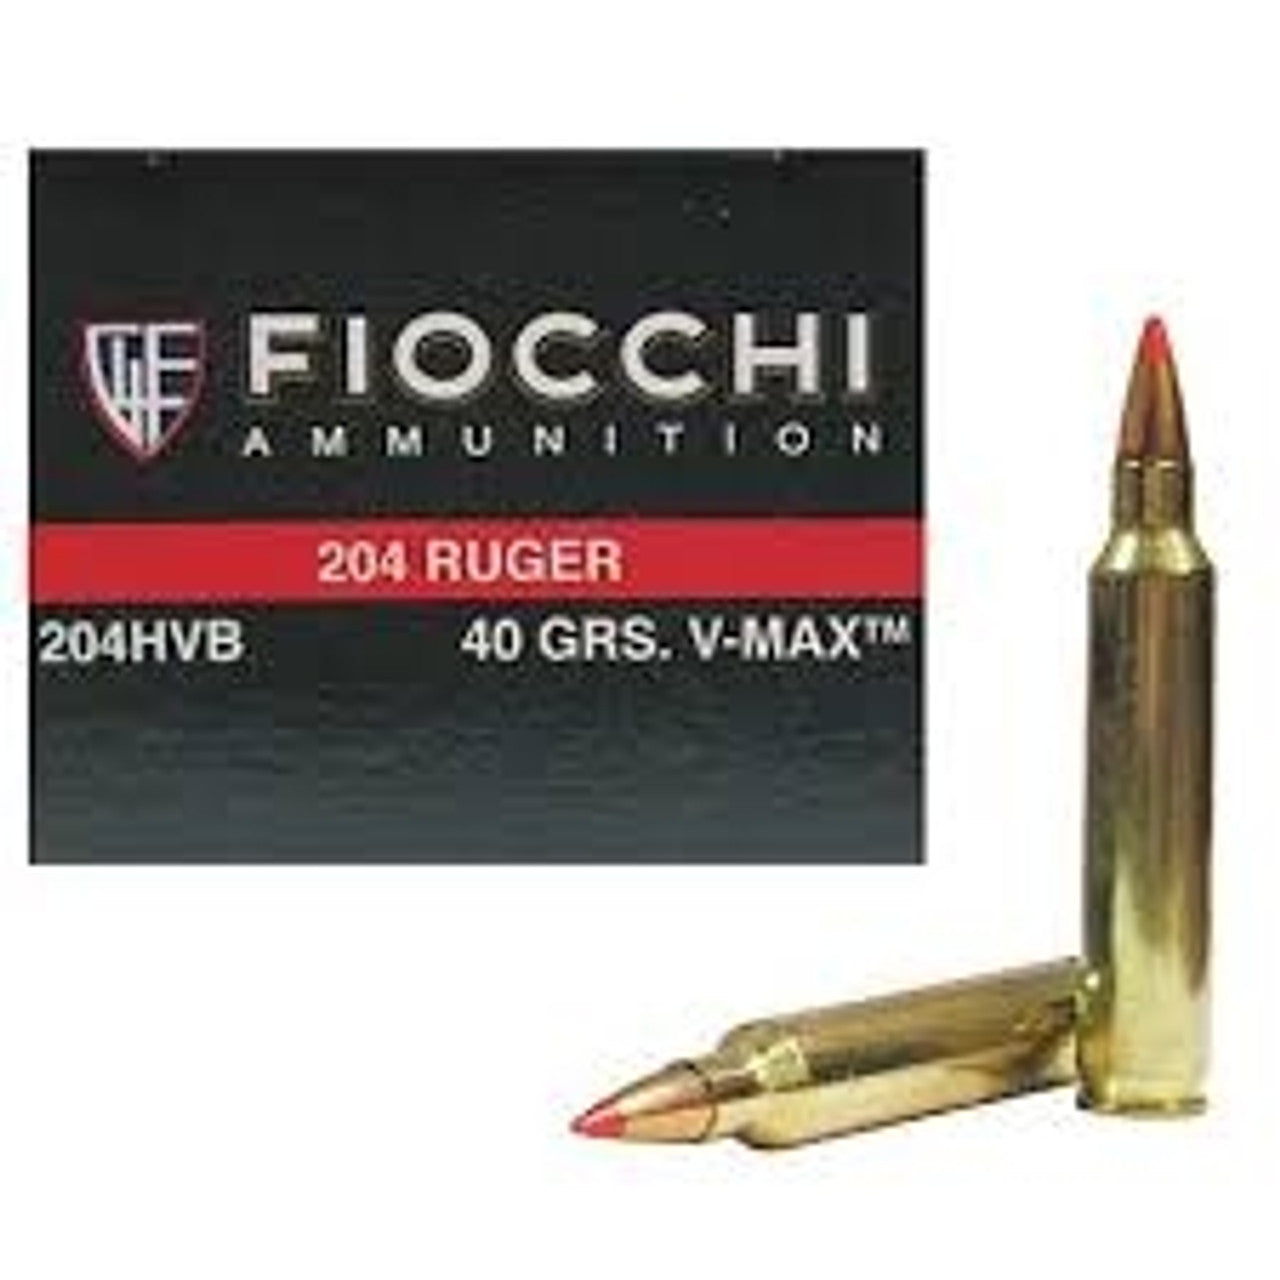 Fiocchi 204 Ruger Extrema Ammunition FI204HVB 40 Grain V-MAX 50 rounds